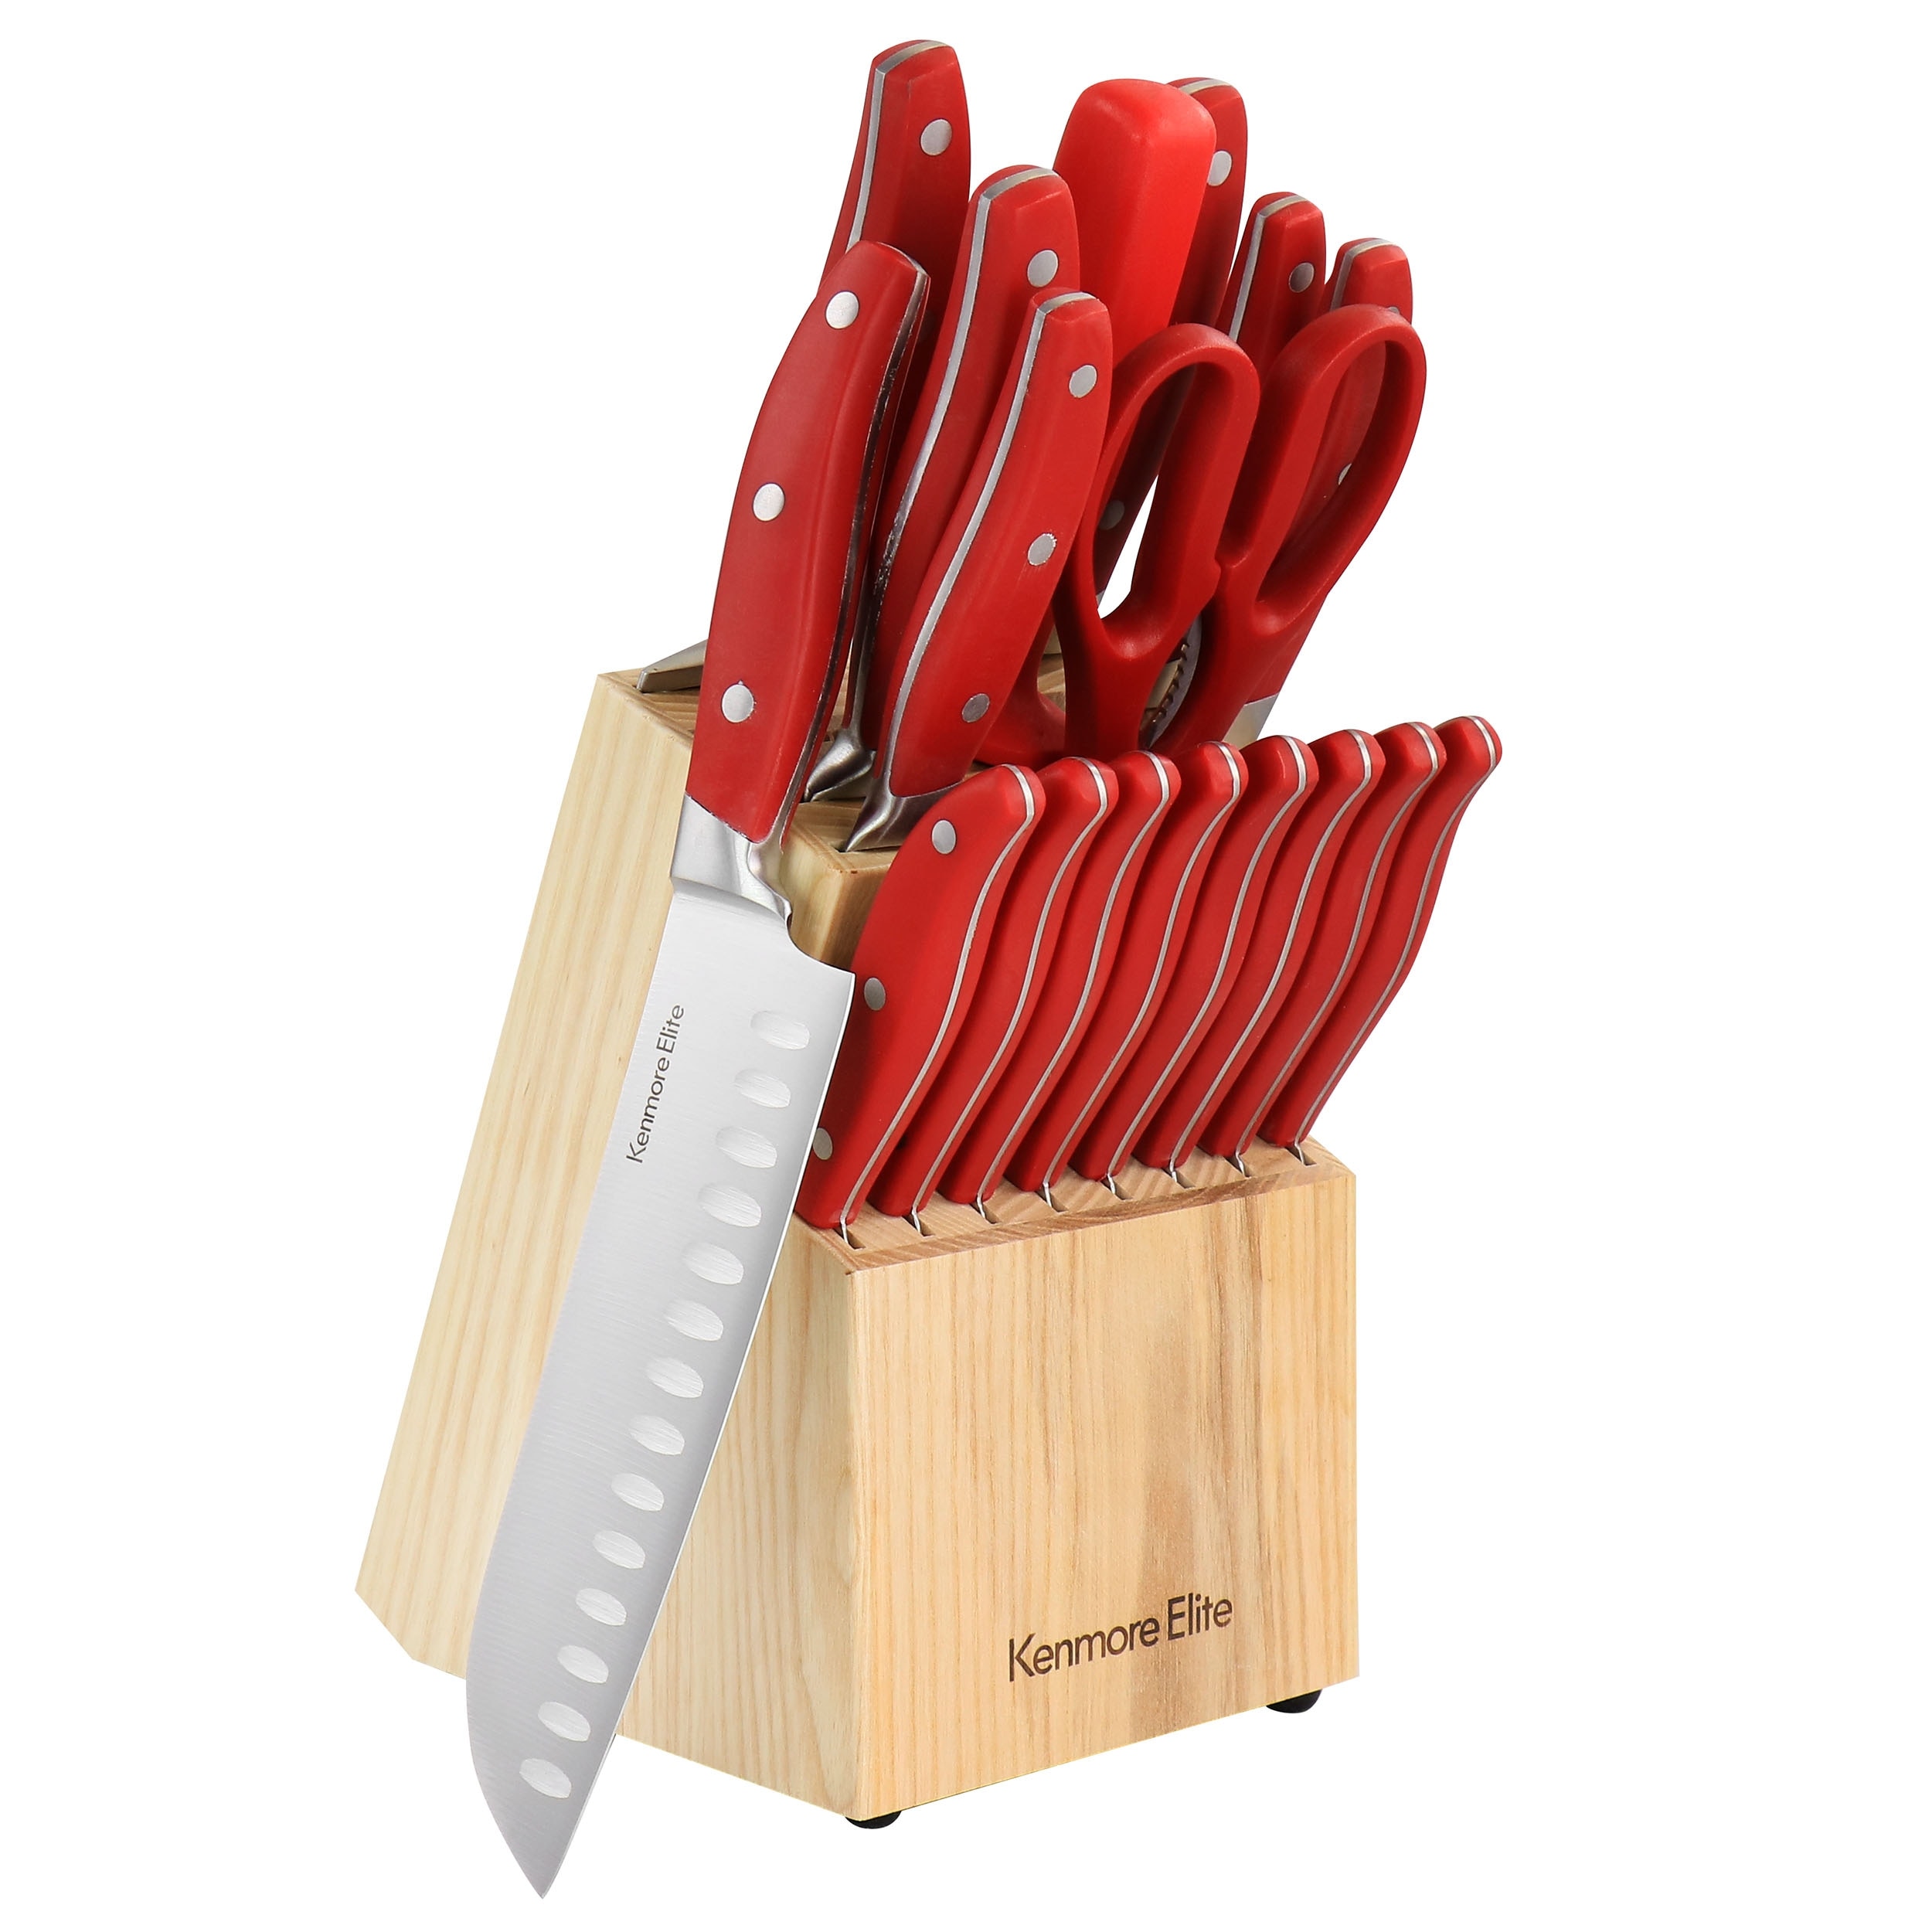 MARTHA STEWART 14-Piece Stainless Steel Cutlery Set in Red with